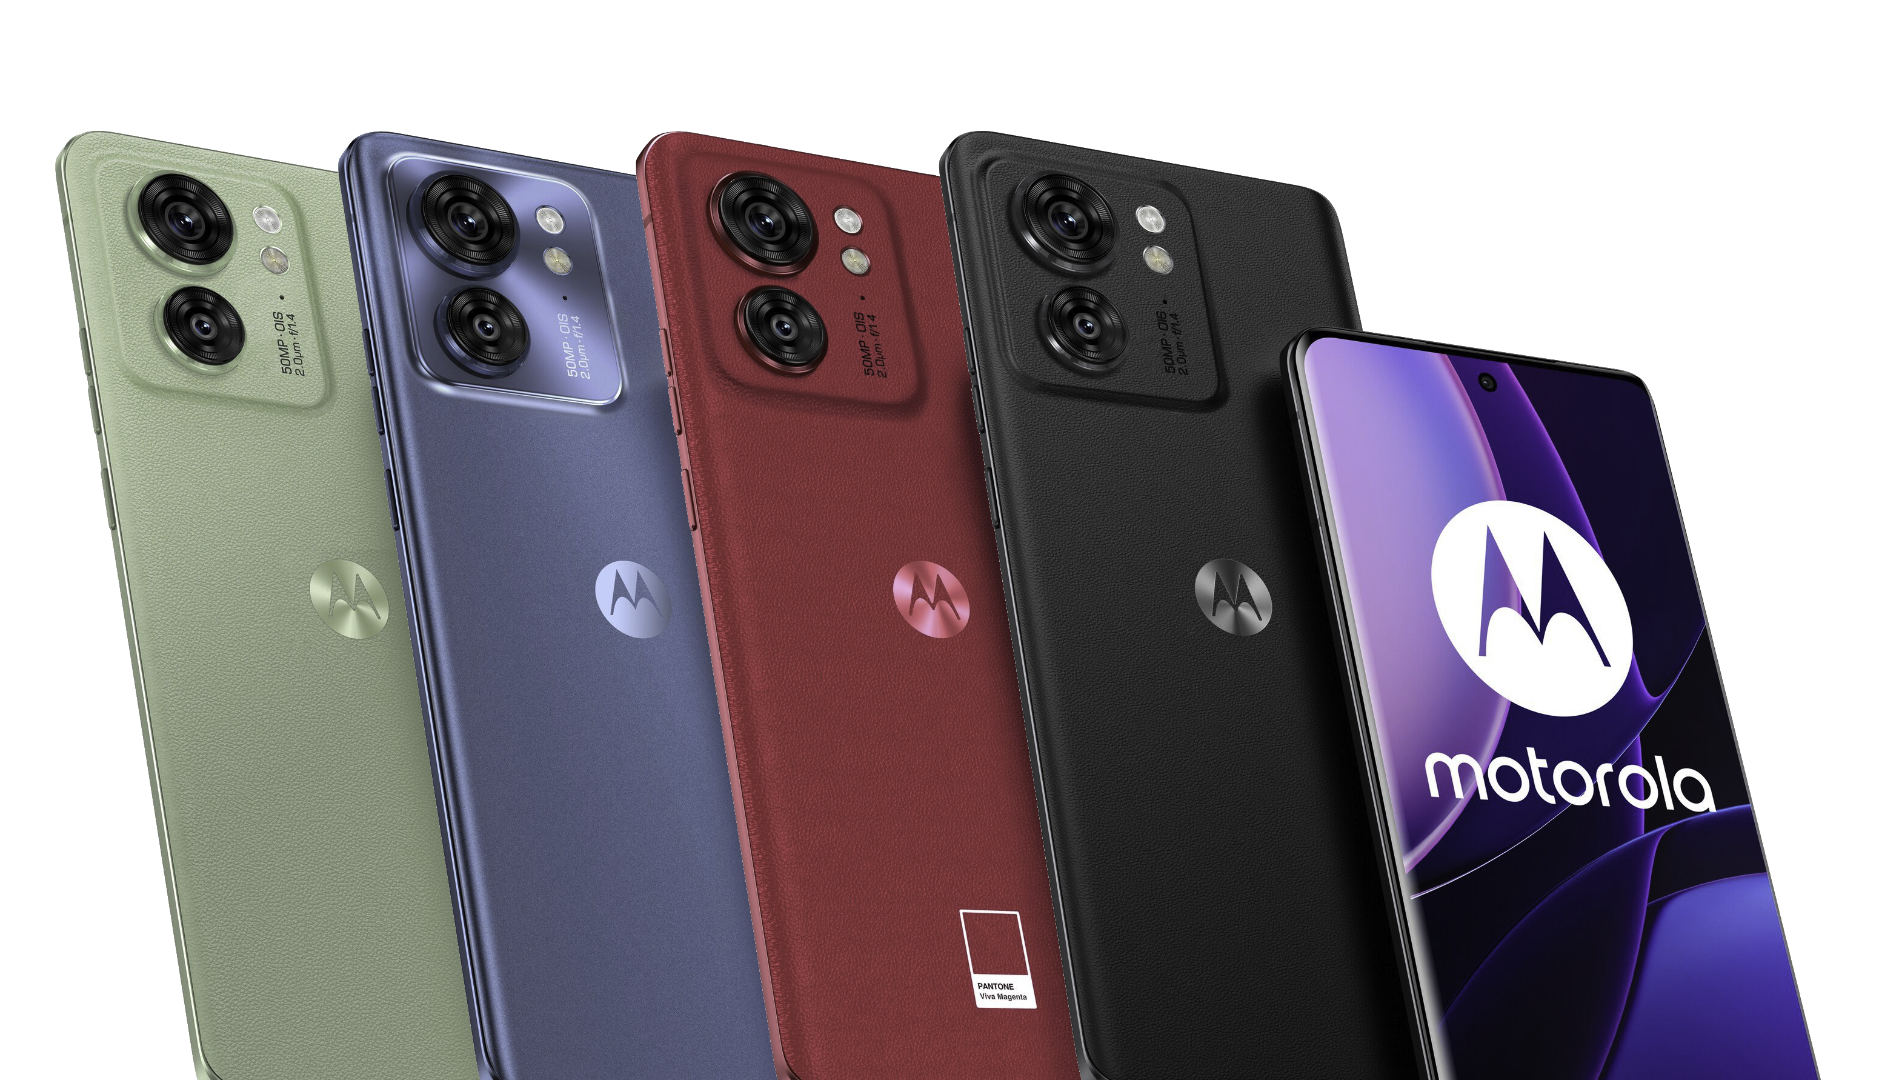 Motorola Edge pictures, official photos